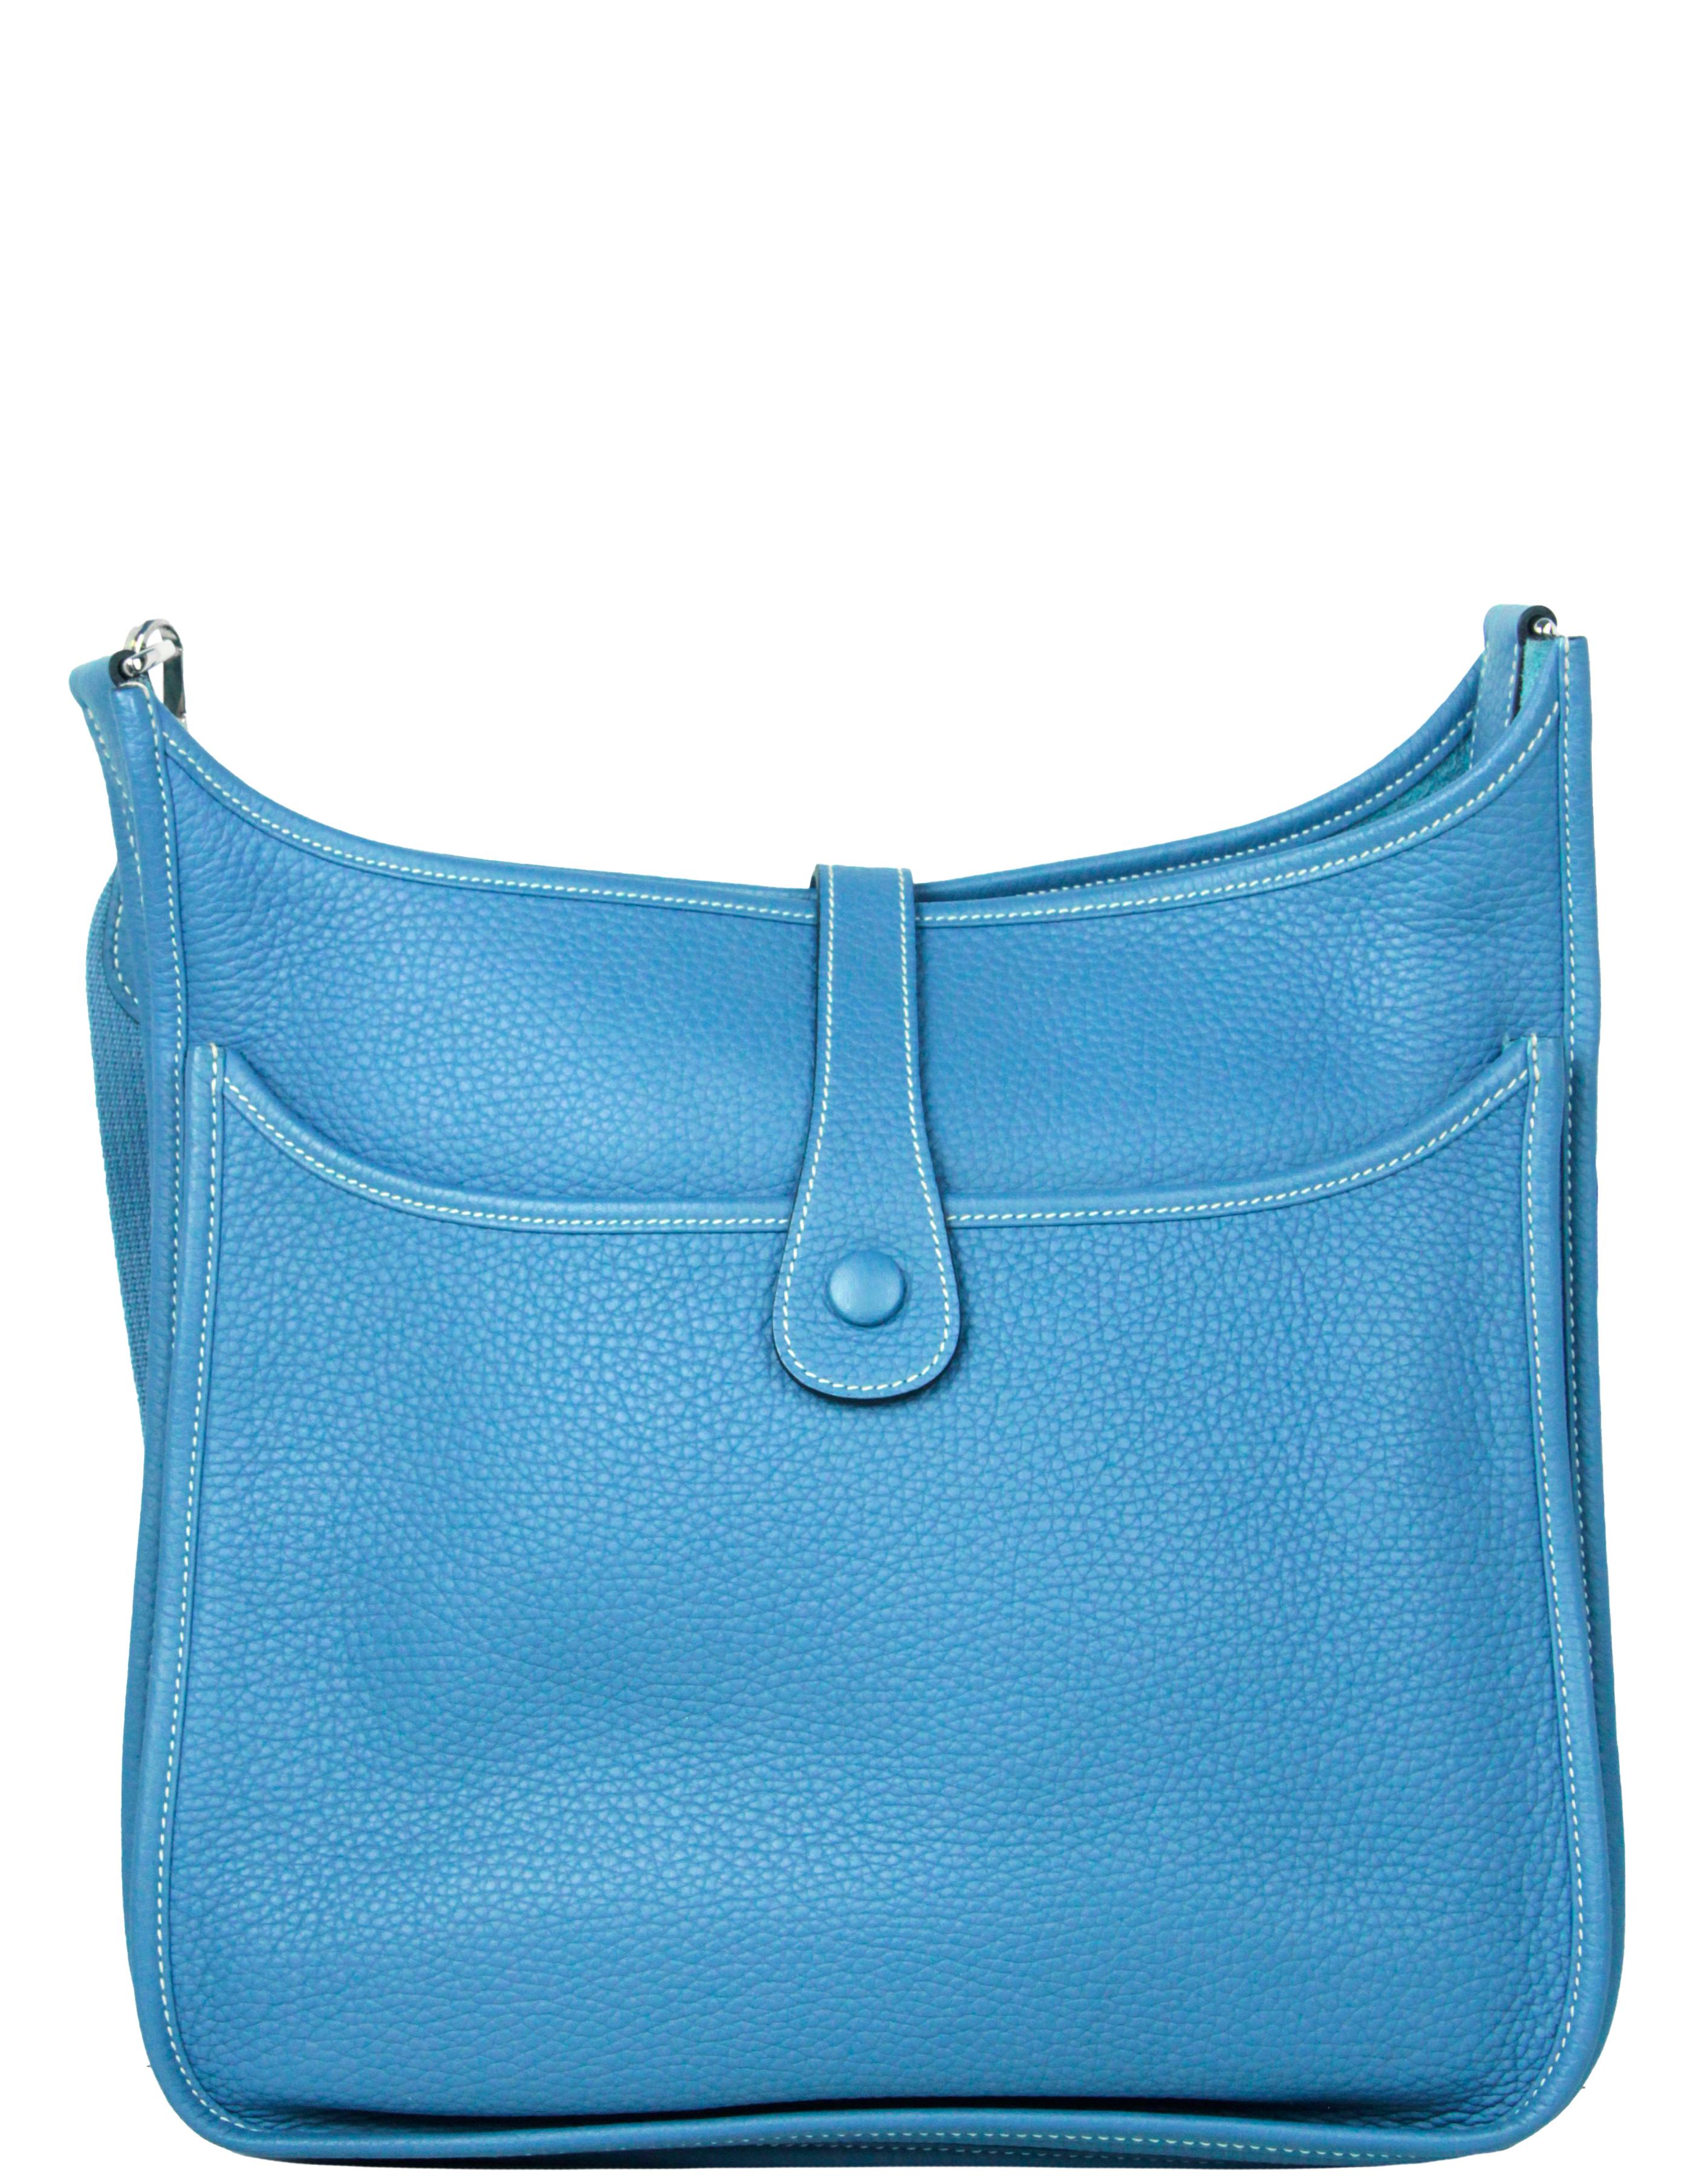 light blue messenger bag